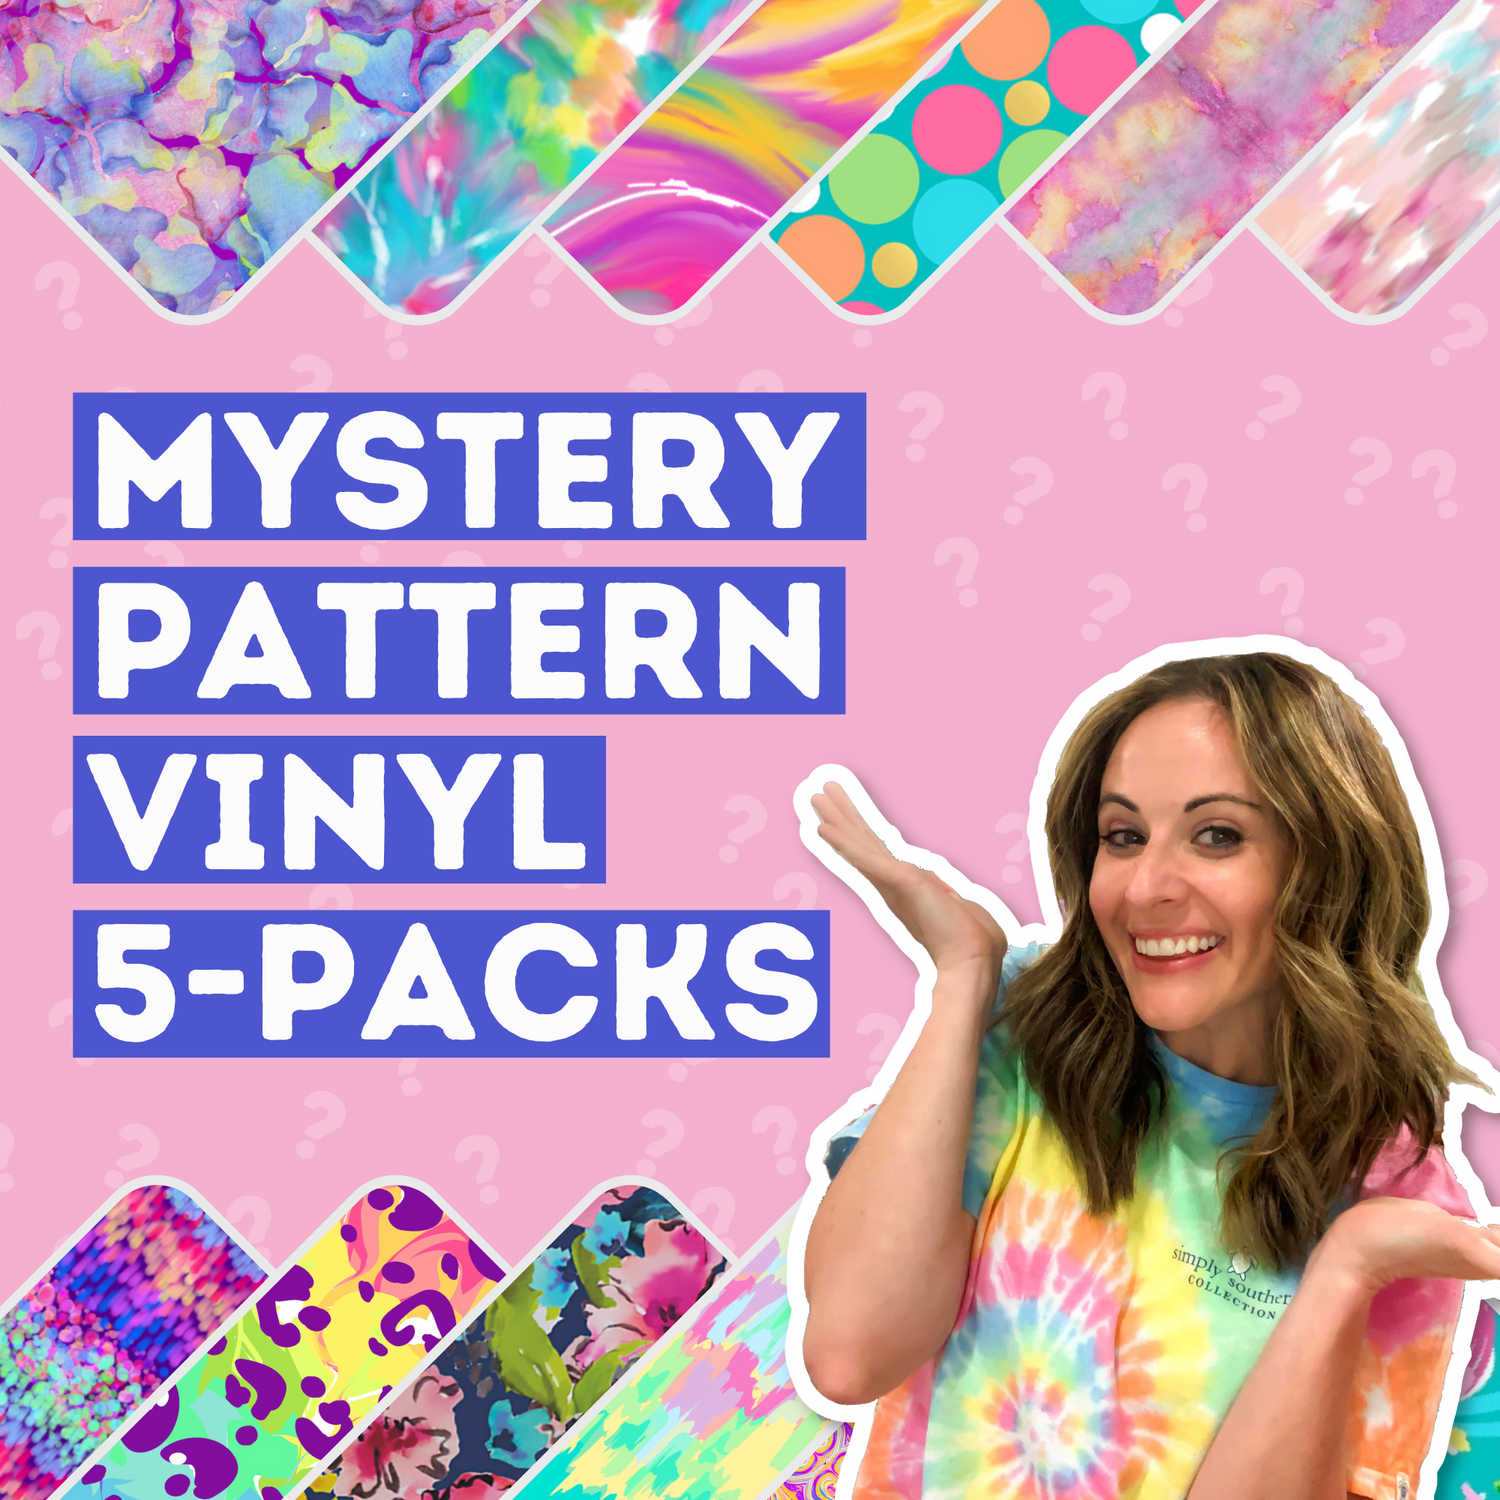 Mystery Pattern Vinyl 5-Packs - HTV or Adhesive